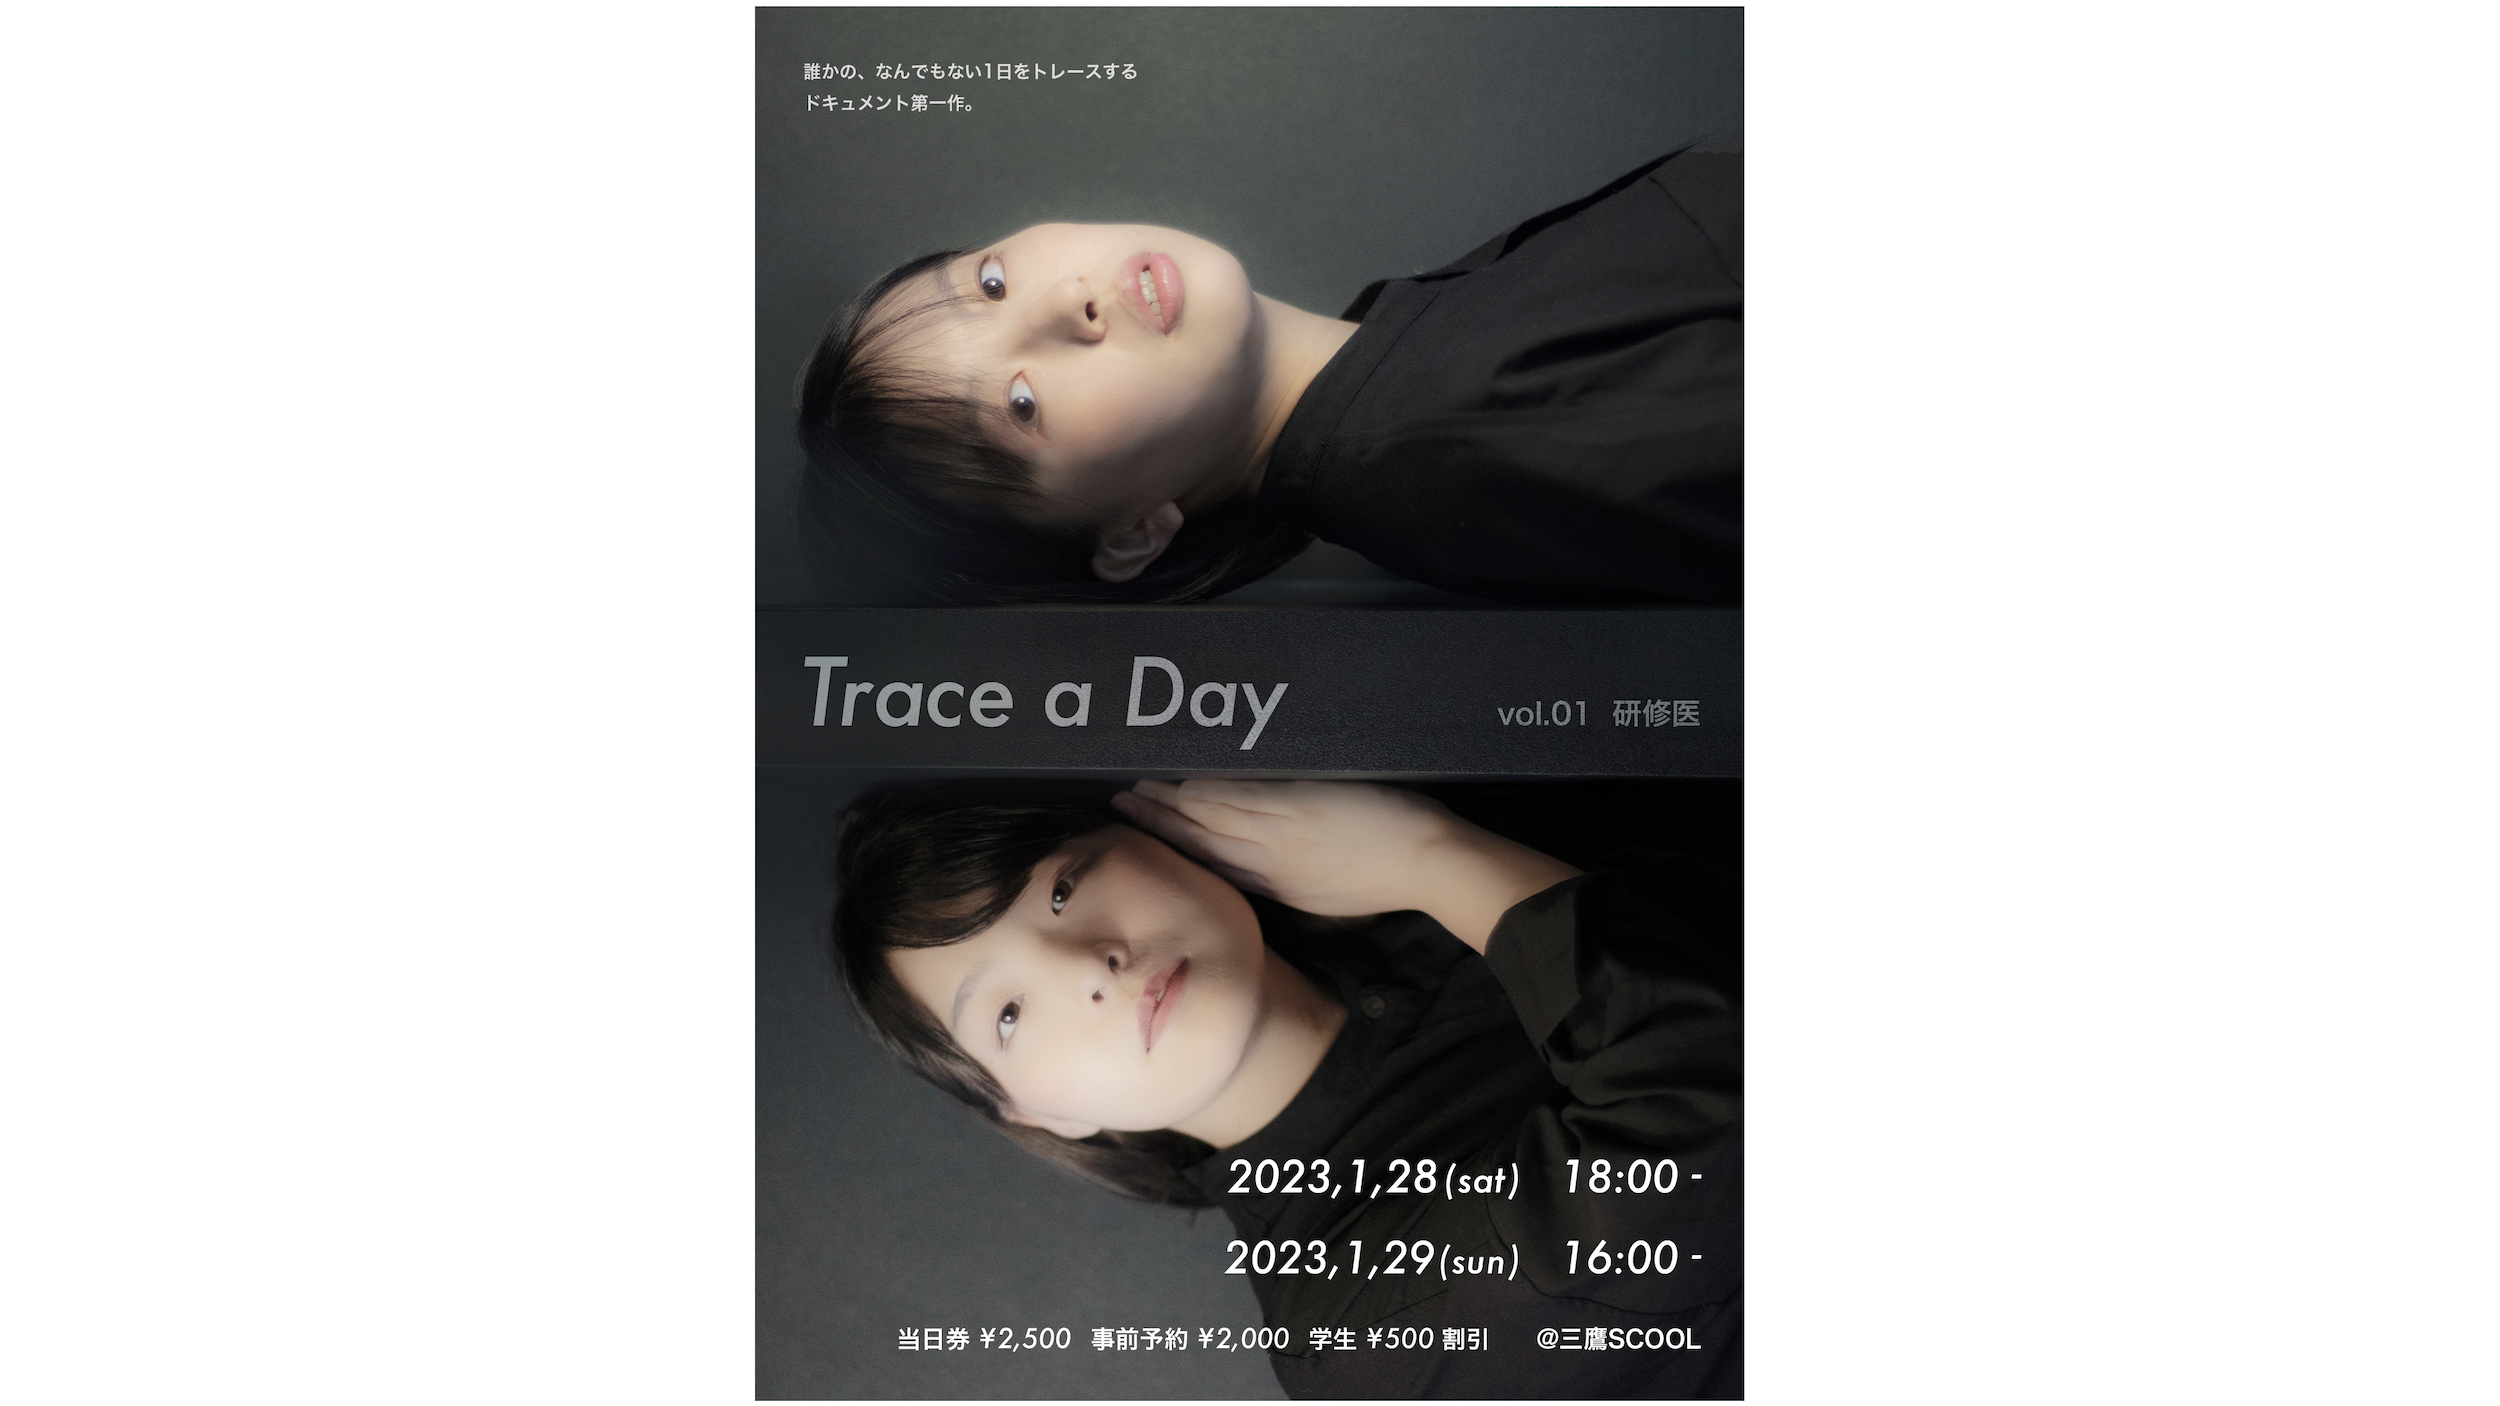 『Trace a Day』 vol.01 研修医